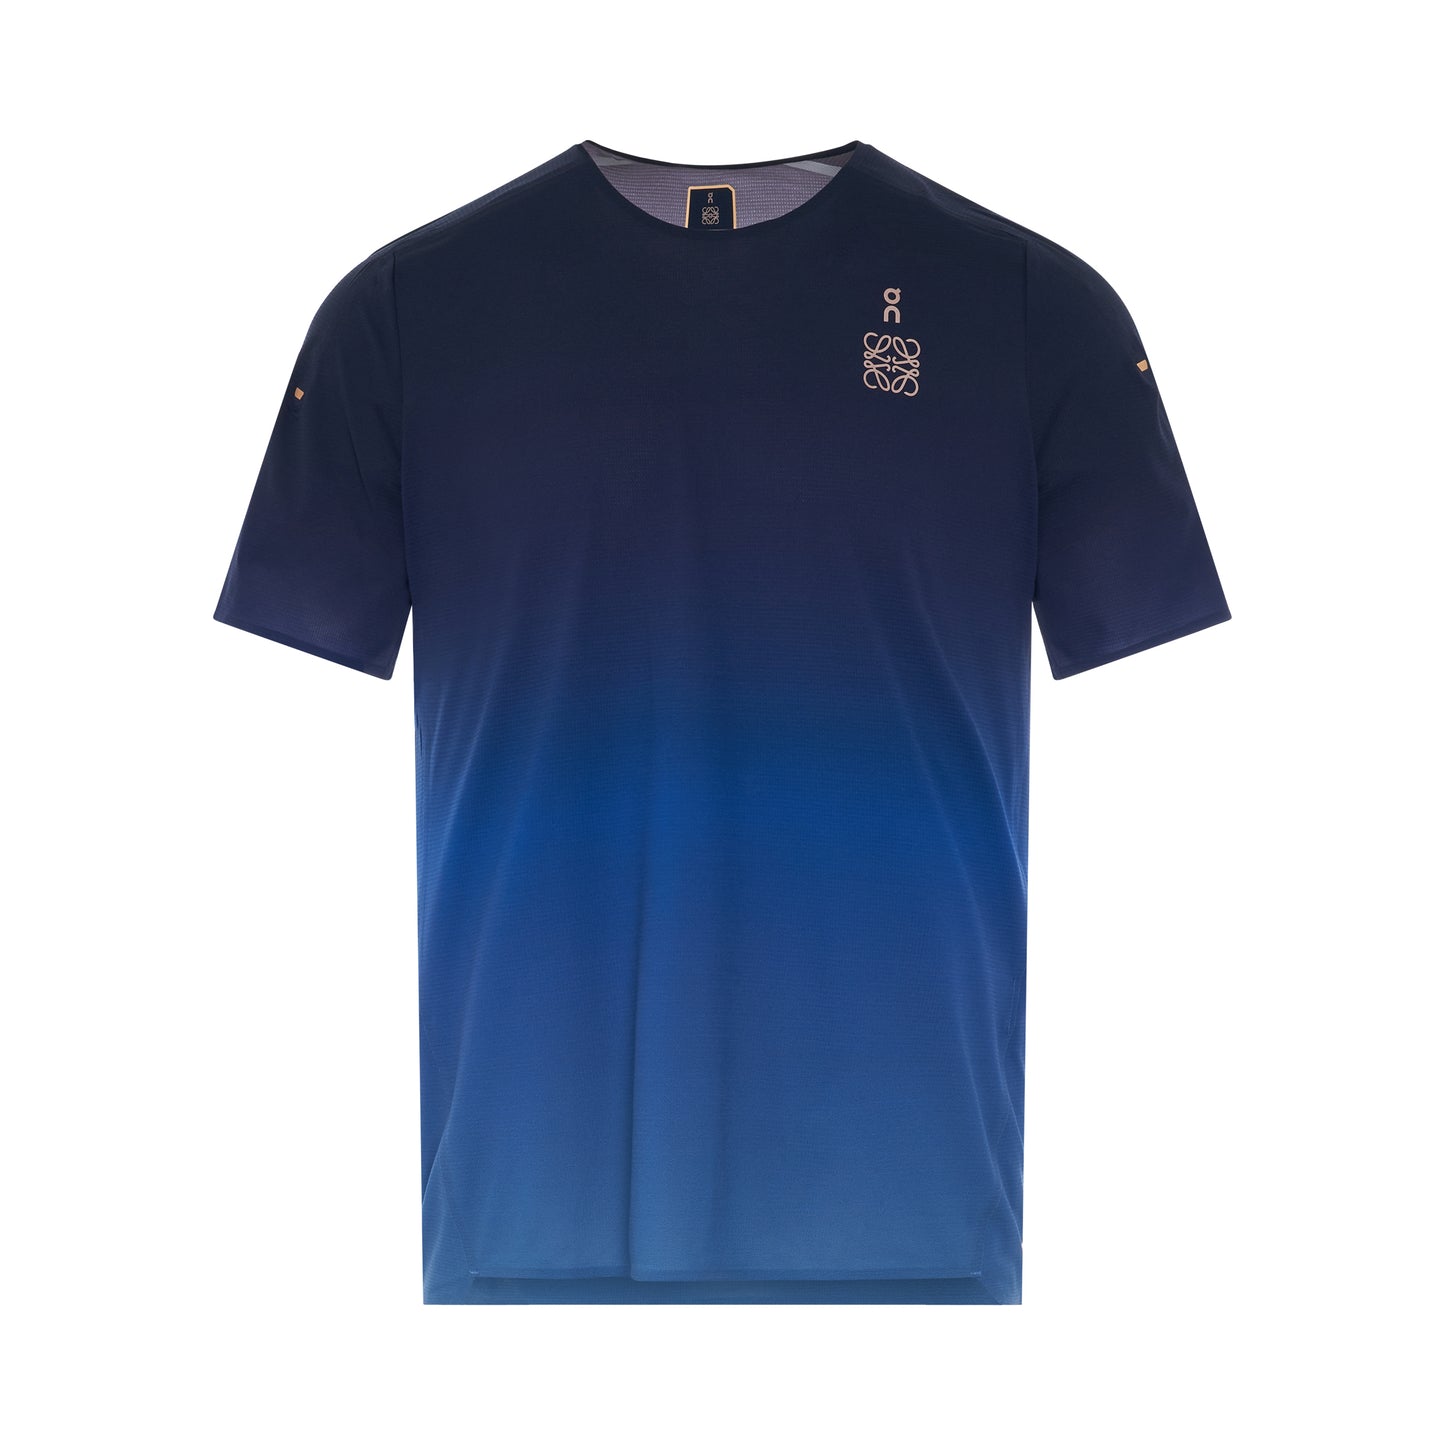 Loewe x ON Performance T-Shirt in Gradient Blue